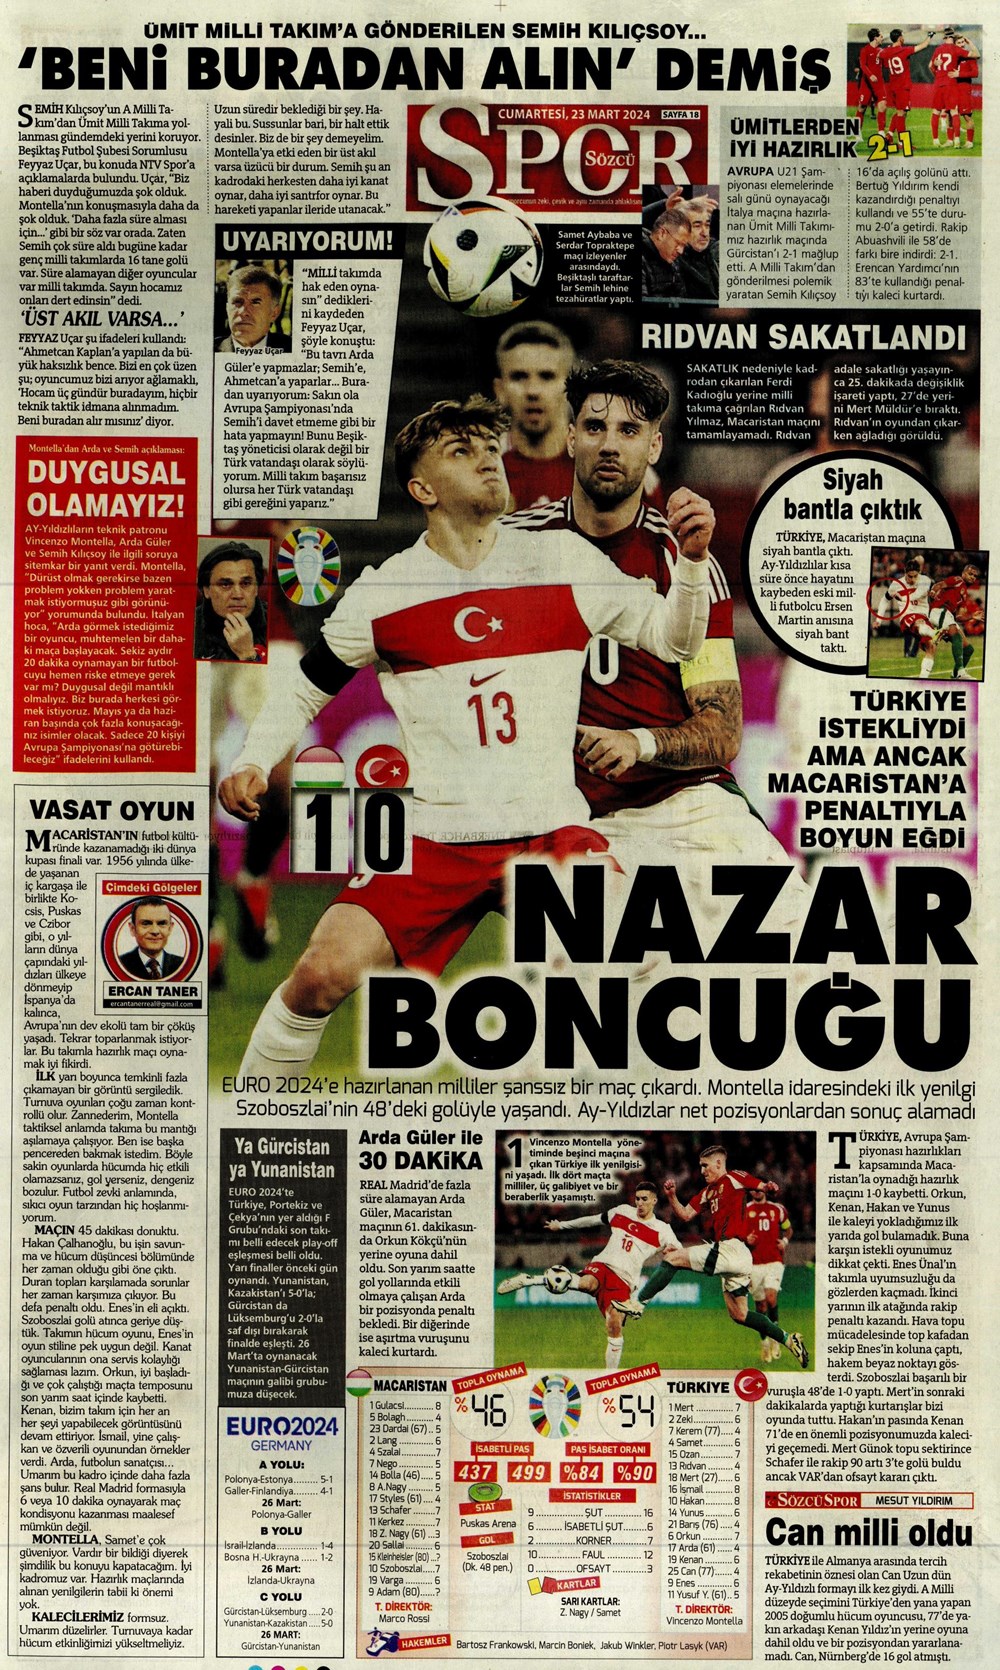 "Macar Kabusu" Sporun Manşetleri (23 Mart 2024) Son Dakika Spor